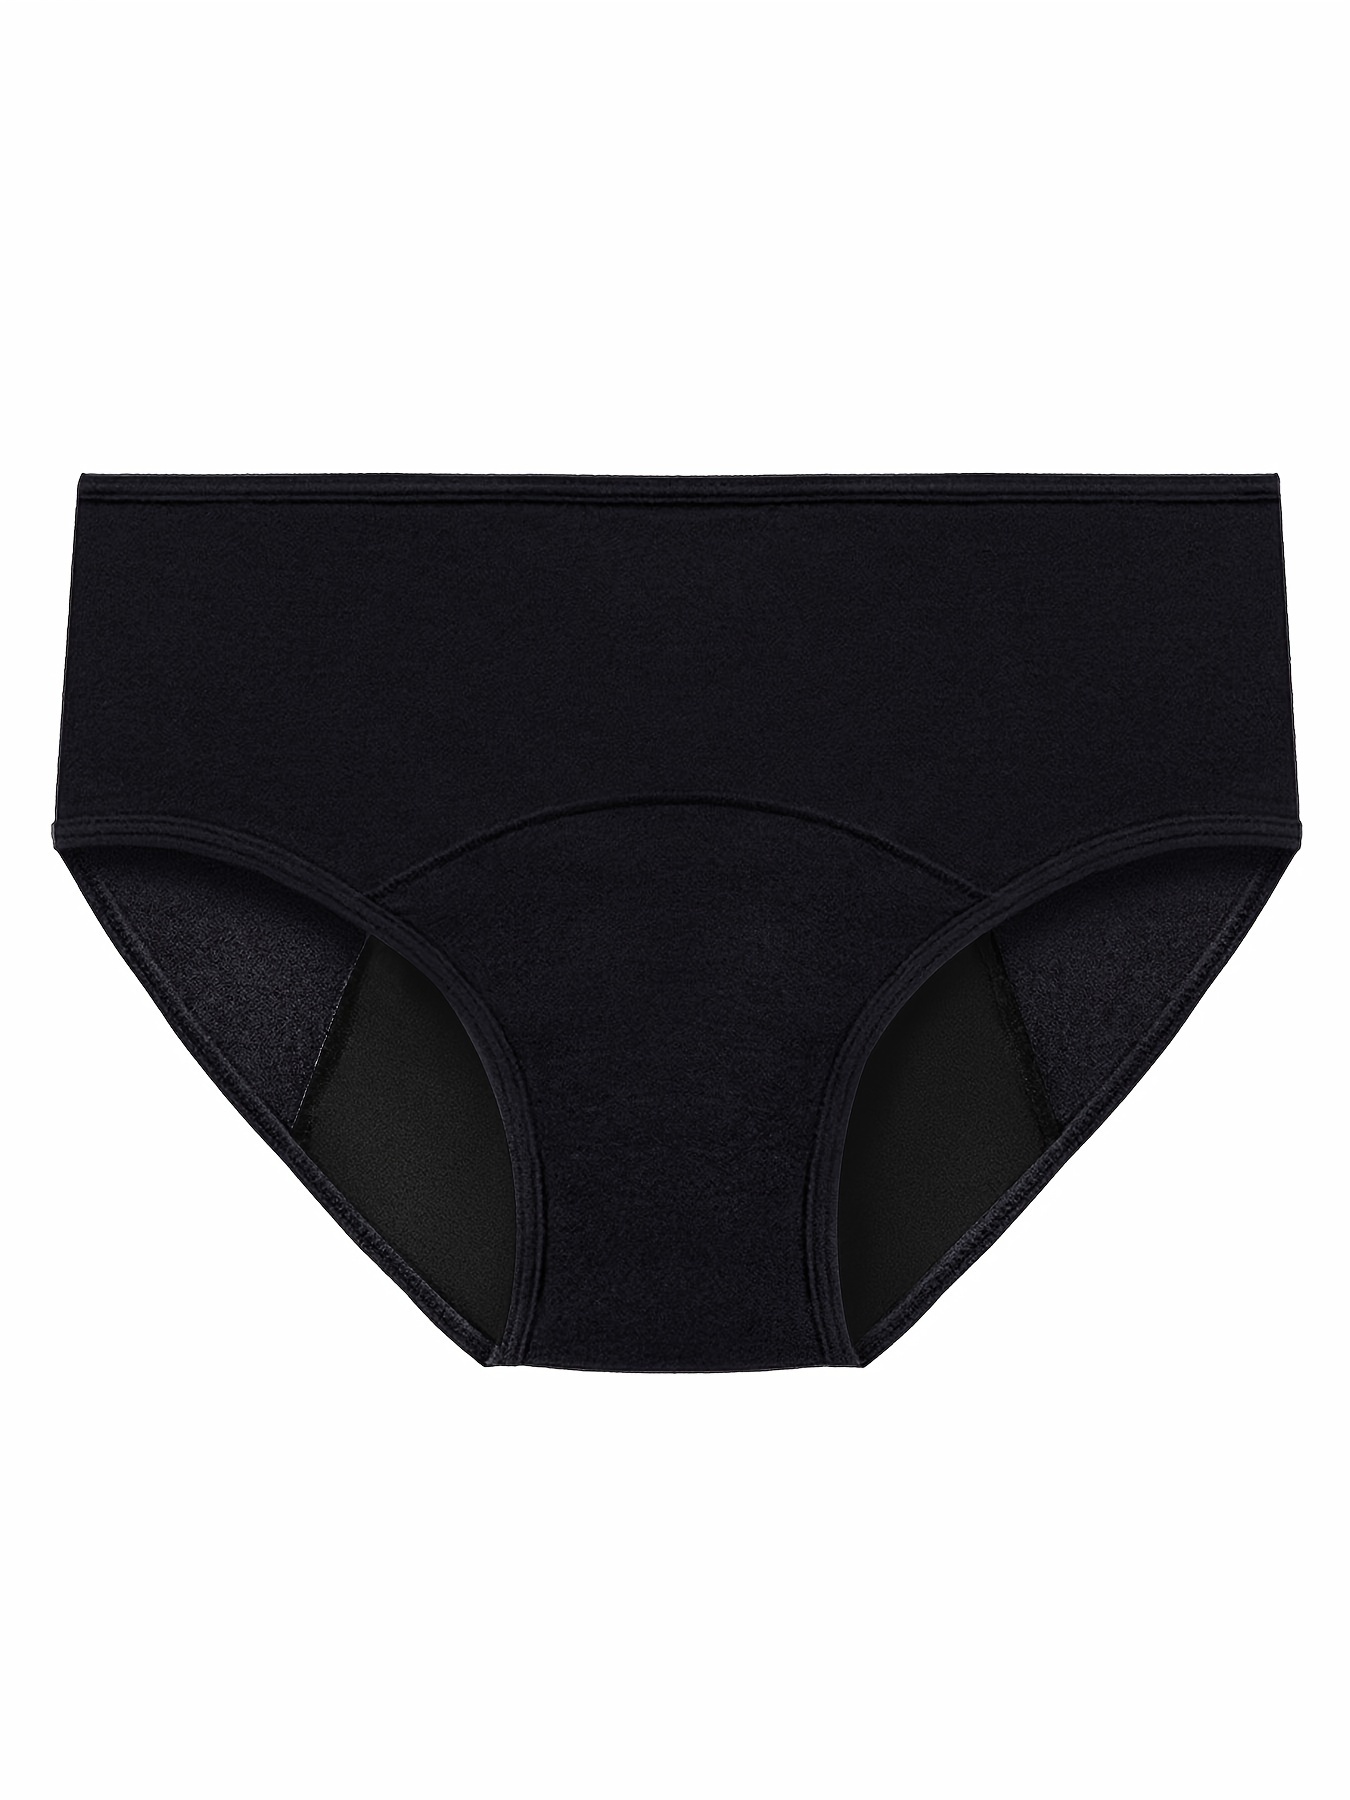 Plus Size Period Underwear For Women, 3 Pack Women Period Pants Leak Proof  Postpartum Panties